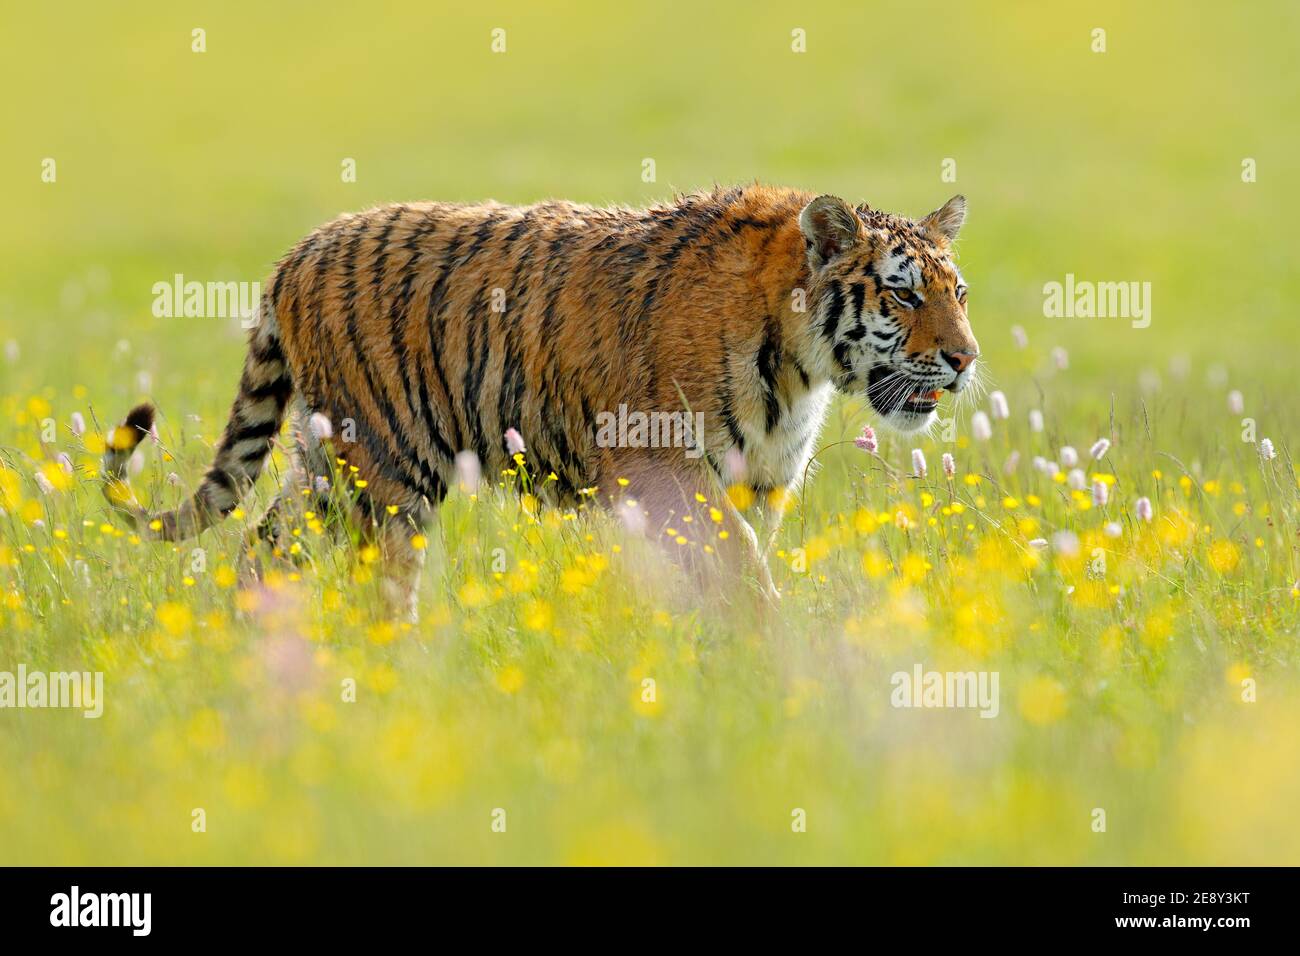 Amur tiger hunting in green white cotton grass. Dangerous animal